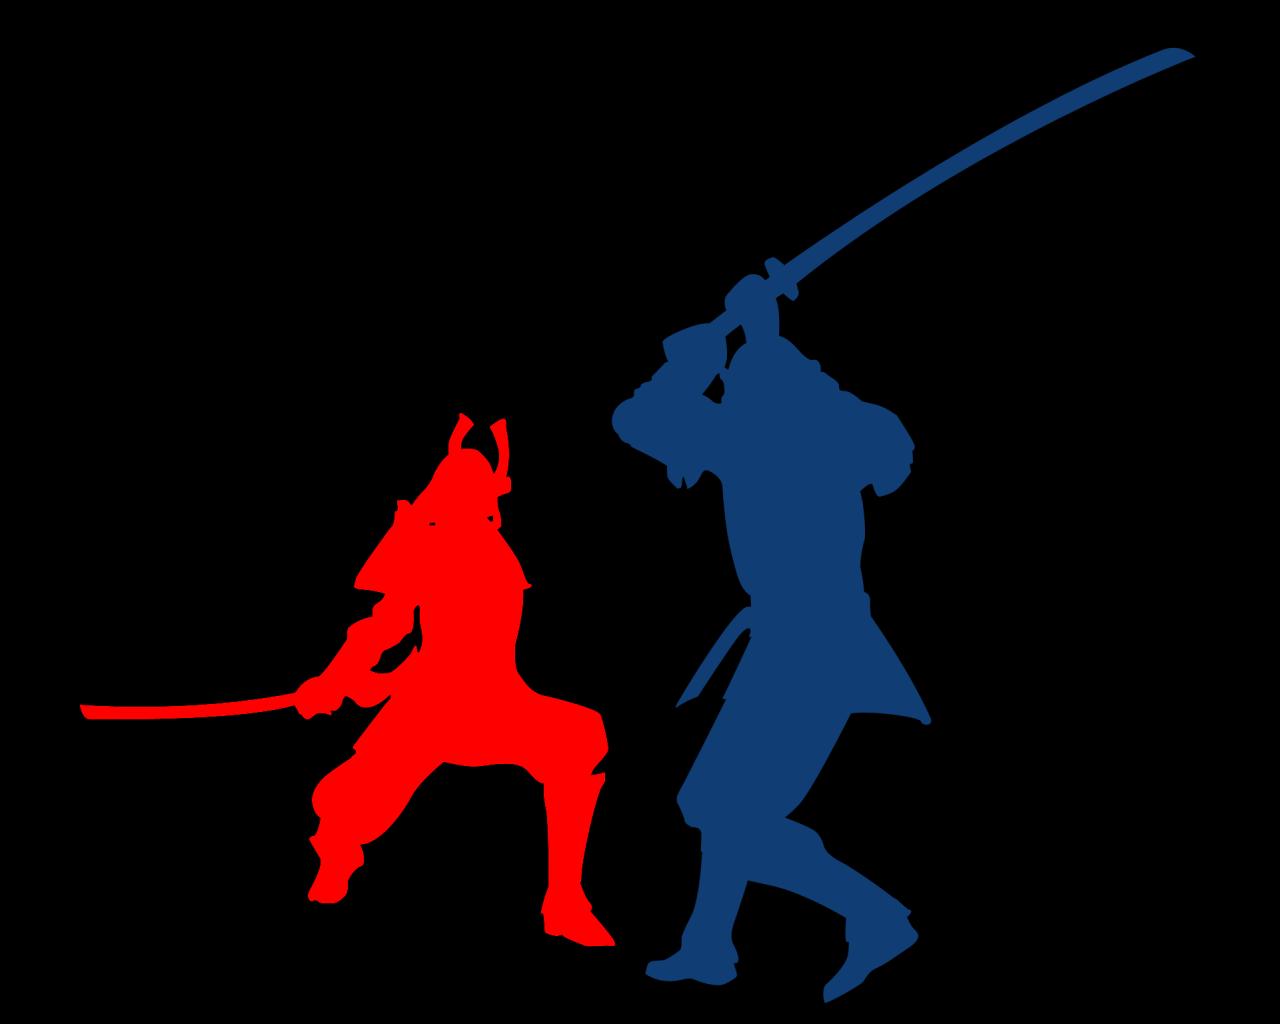 Free download blue red battle fight samurai vs outline Normal 43 640x480 800x600 [1280x1024] for your Desktop, Mobile & Tablet. Explore Red vs Blue Wallpaper 1280x1024. Red Vs Blue